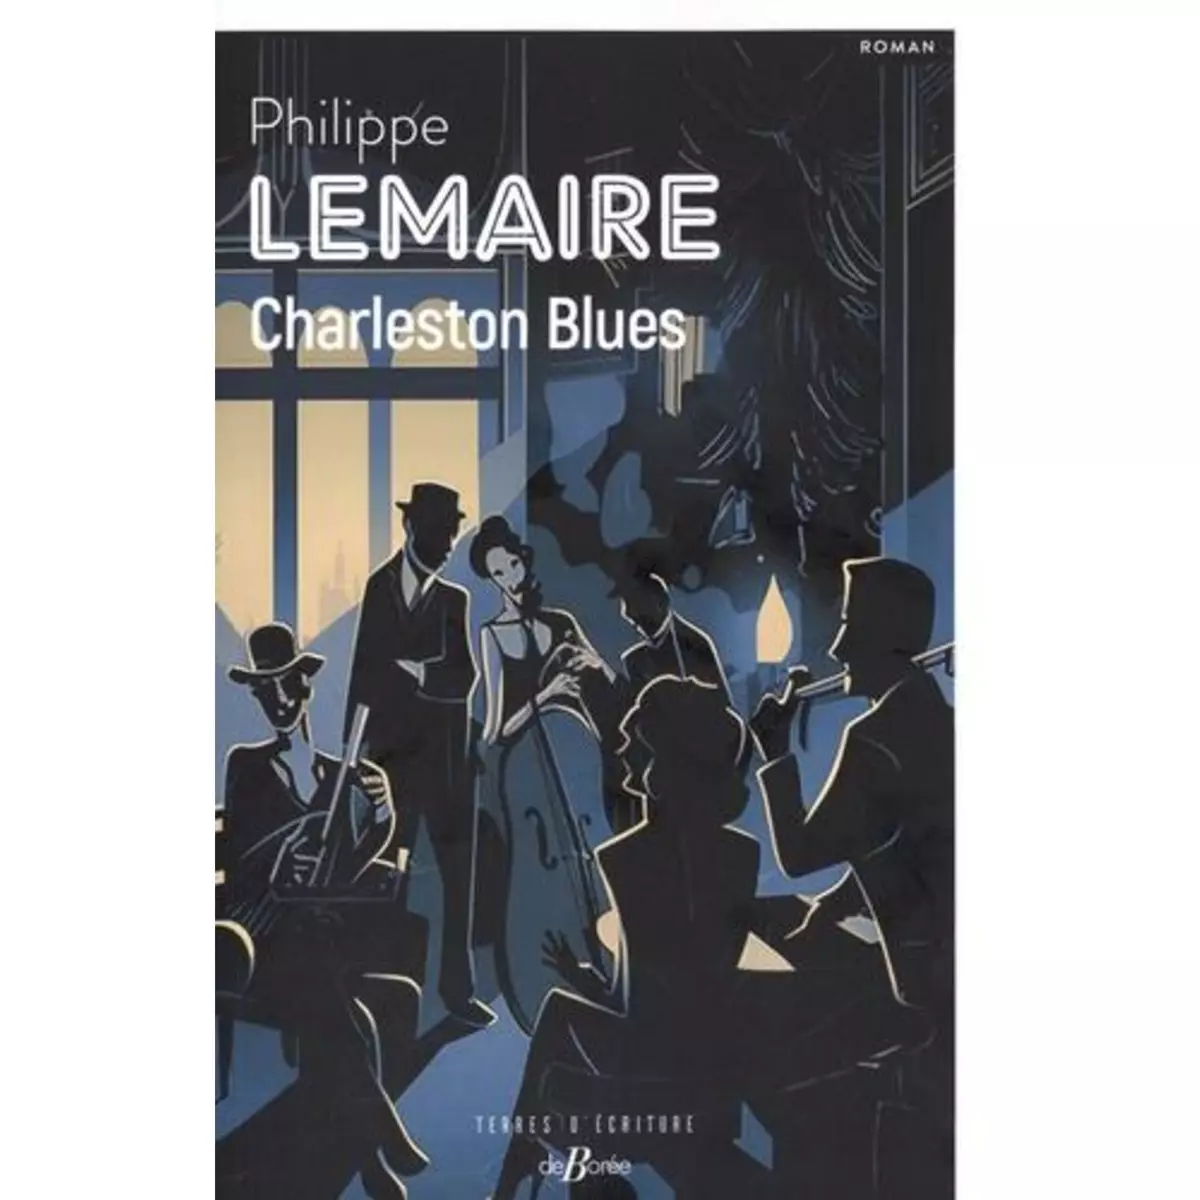  CHARLESTON BLUES, Lemaire Philippe